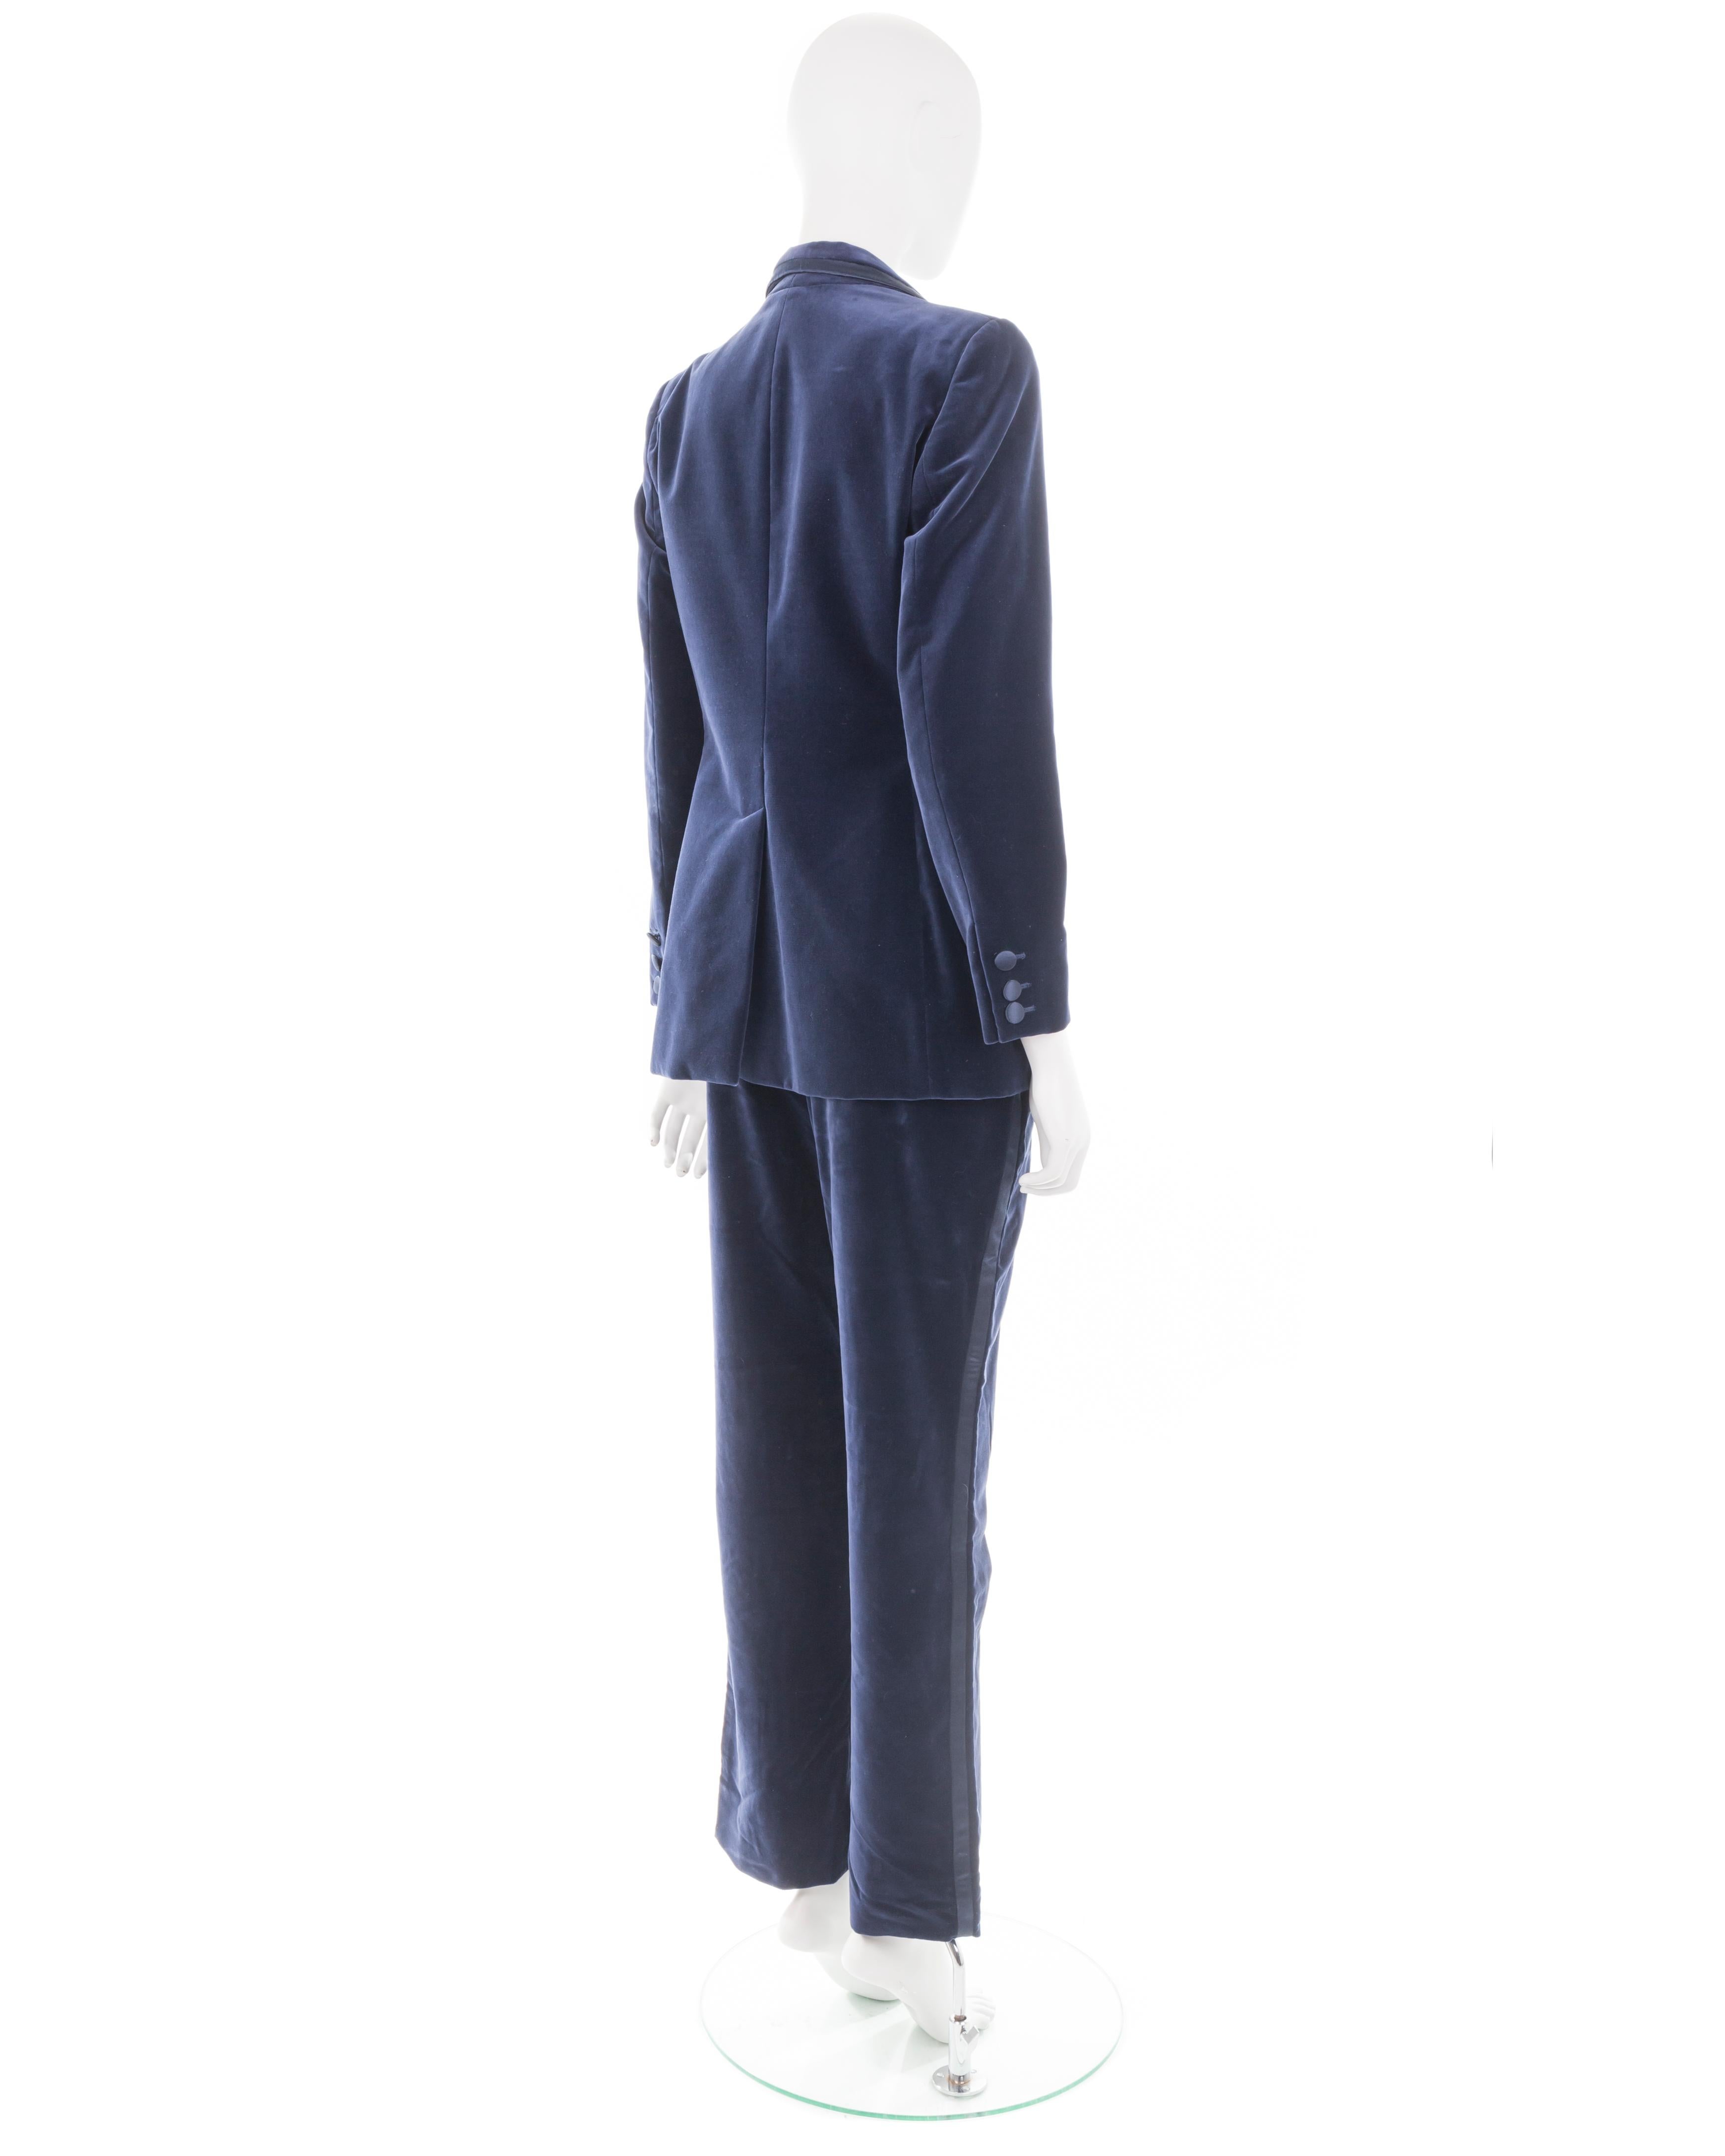 Gucci F/W 1996 blue velvet jacket and pant tuxedo suit 1